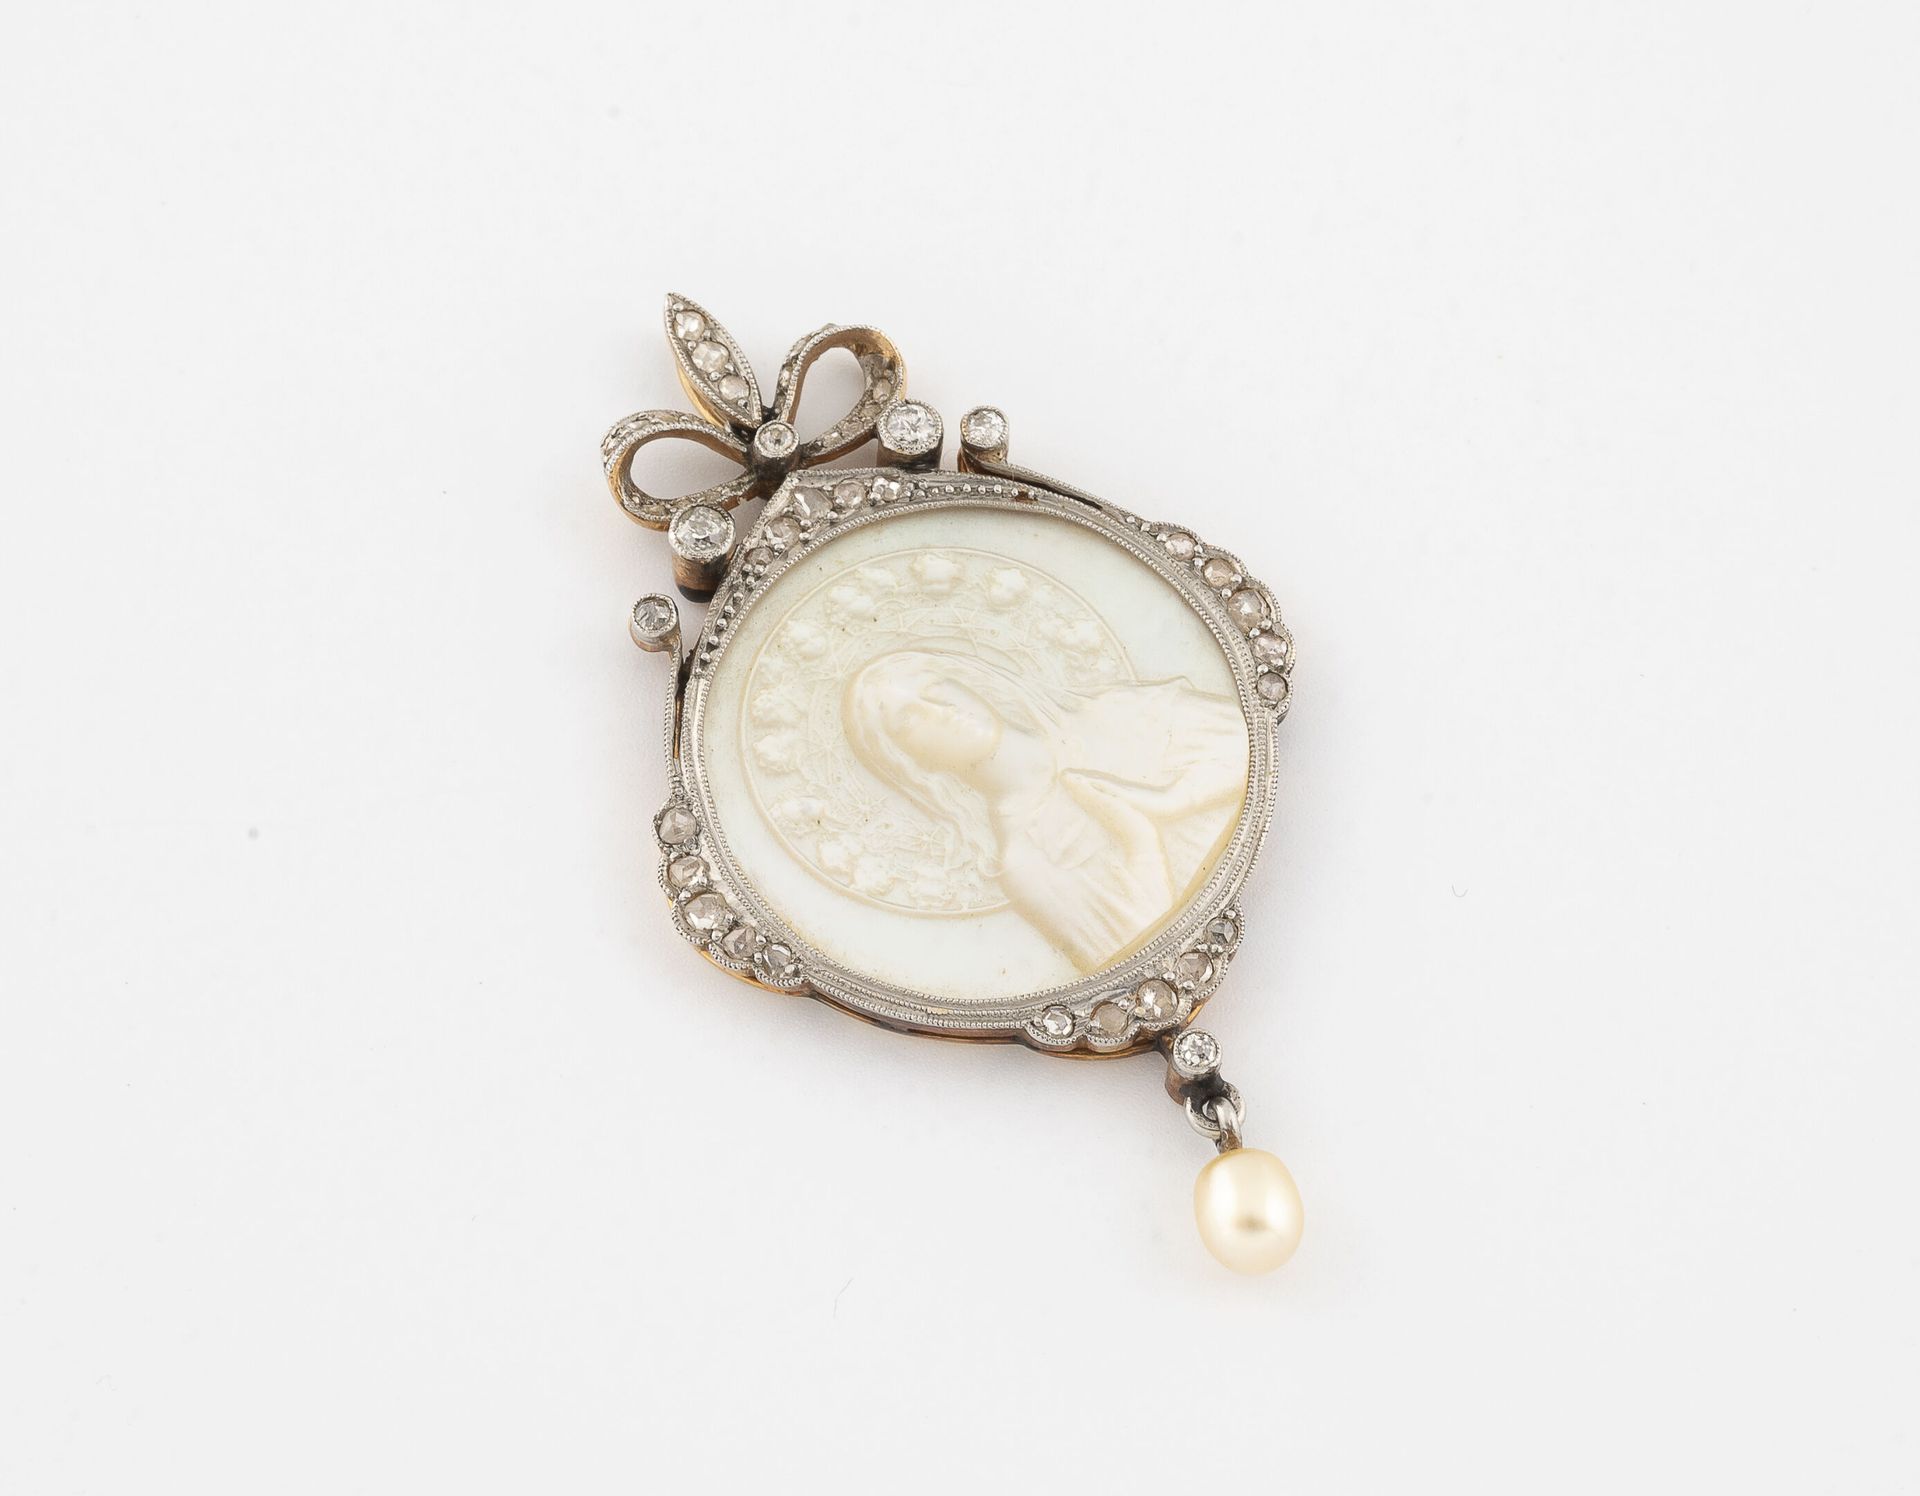 FRANCE, vers 1910-1920 黄金（750）和铂金（850）奖章吊坠，镶有描绘圣母玛利亚的白色珍珠母浮雕，在种子和密镶中镶有玫瑰切割钻石。

扣&hellip;